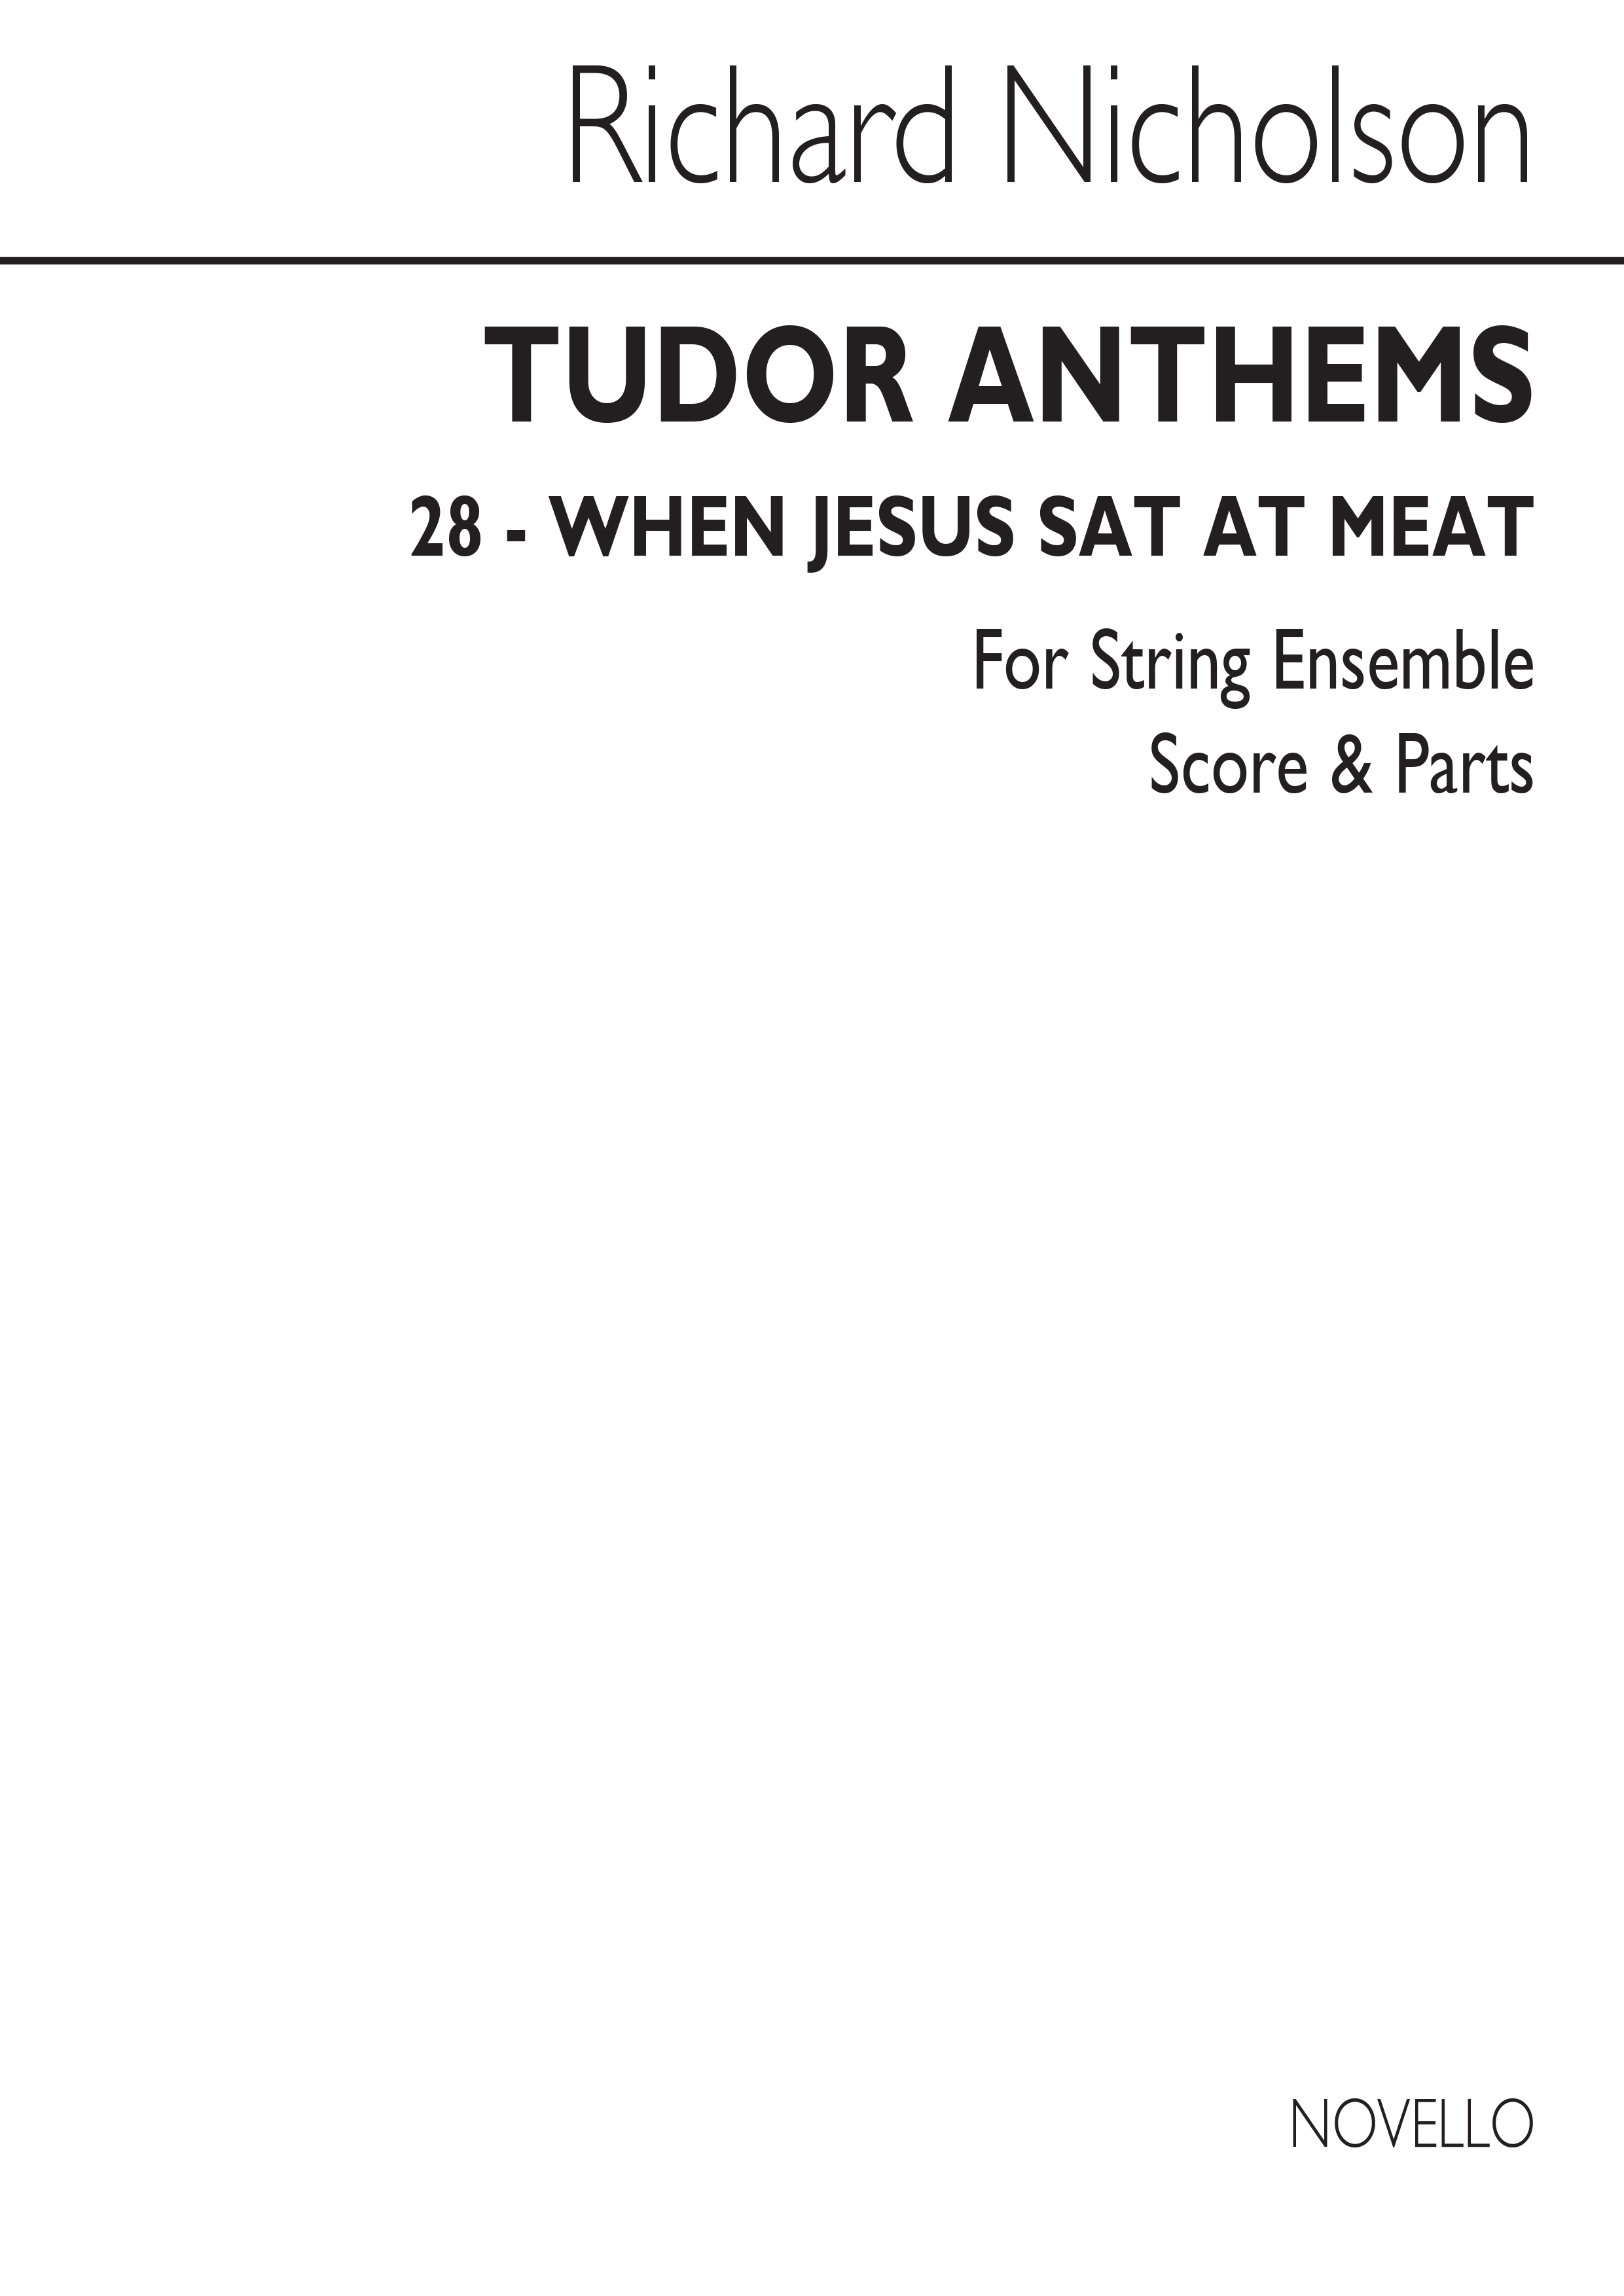 Richard Nicholson: When Jesus Sat At Meat (Tudor Anthems): String Ensemble: